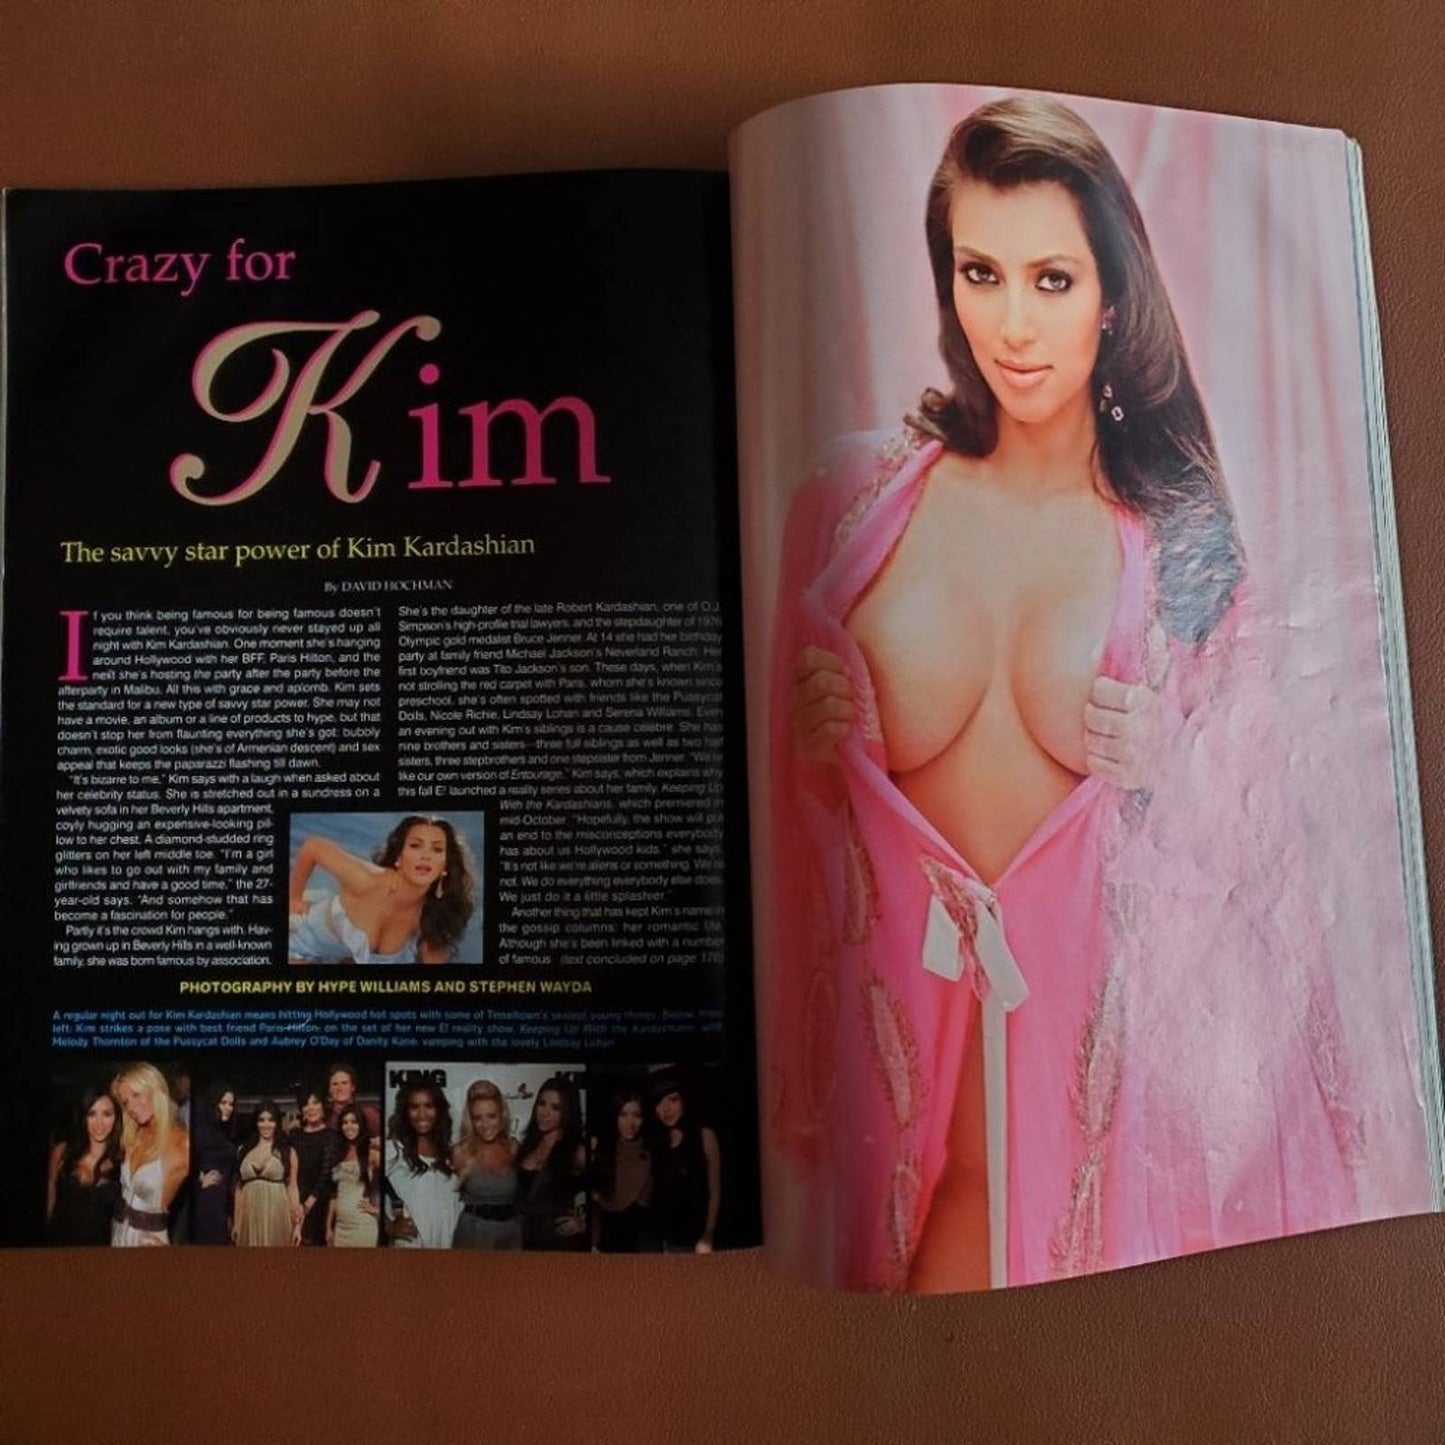 Rare Playboy Magazine December 2007